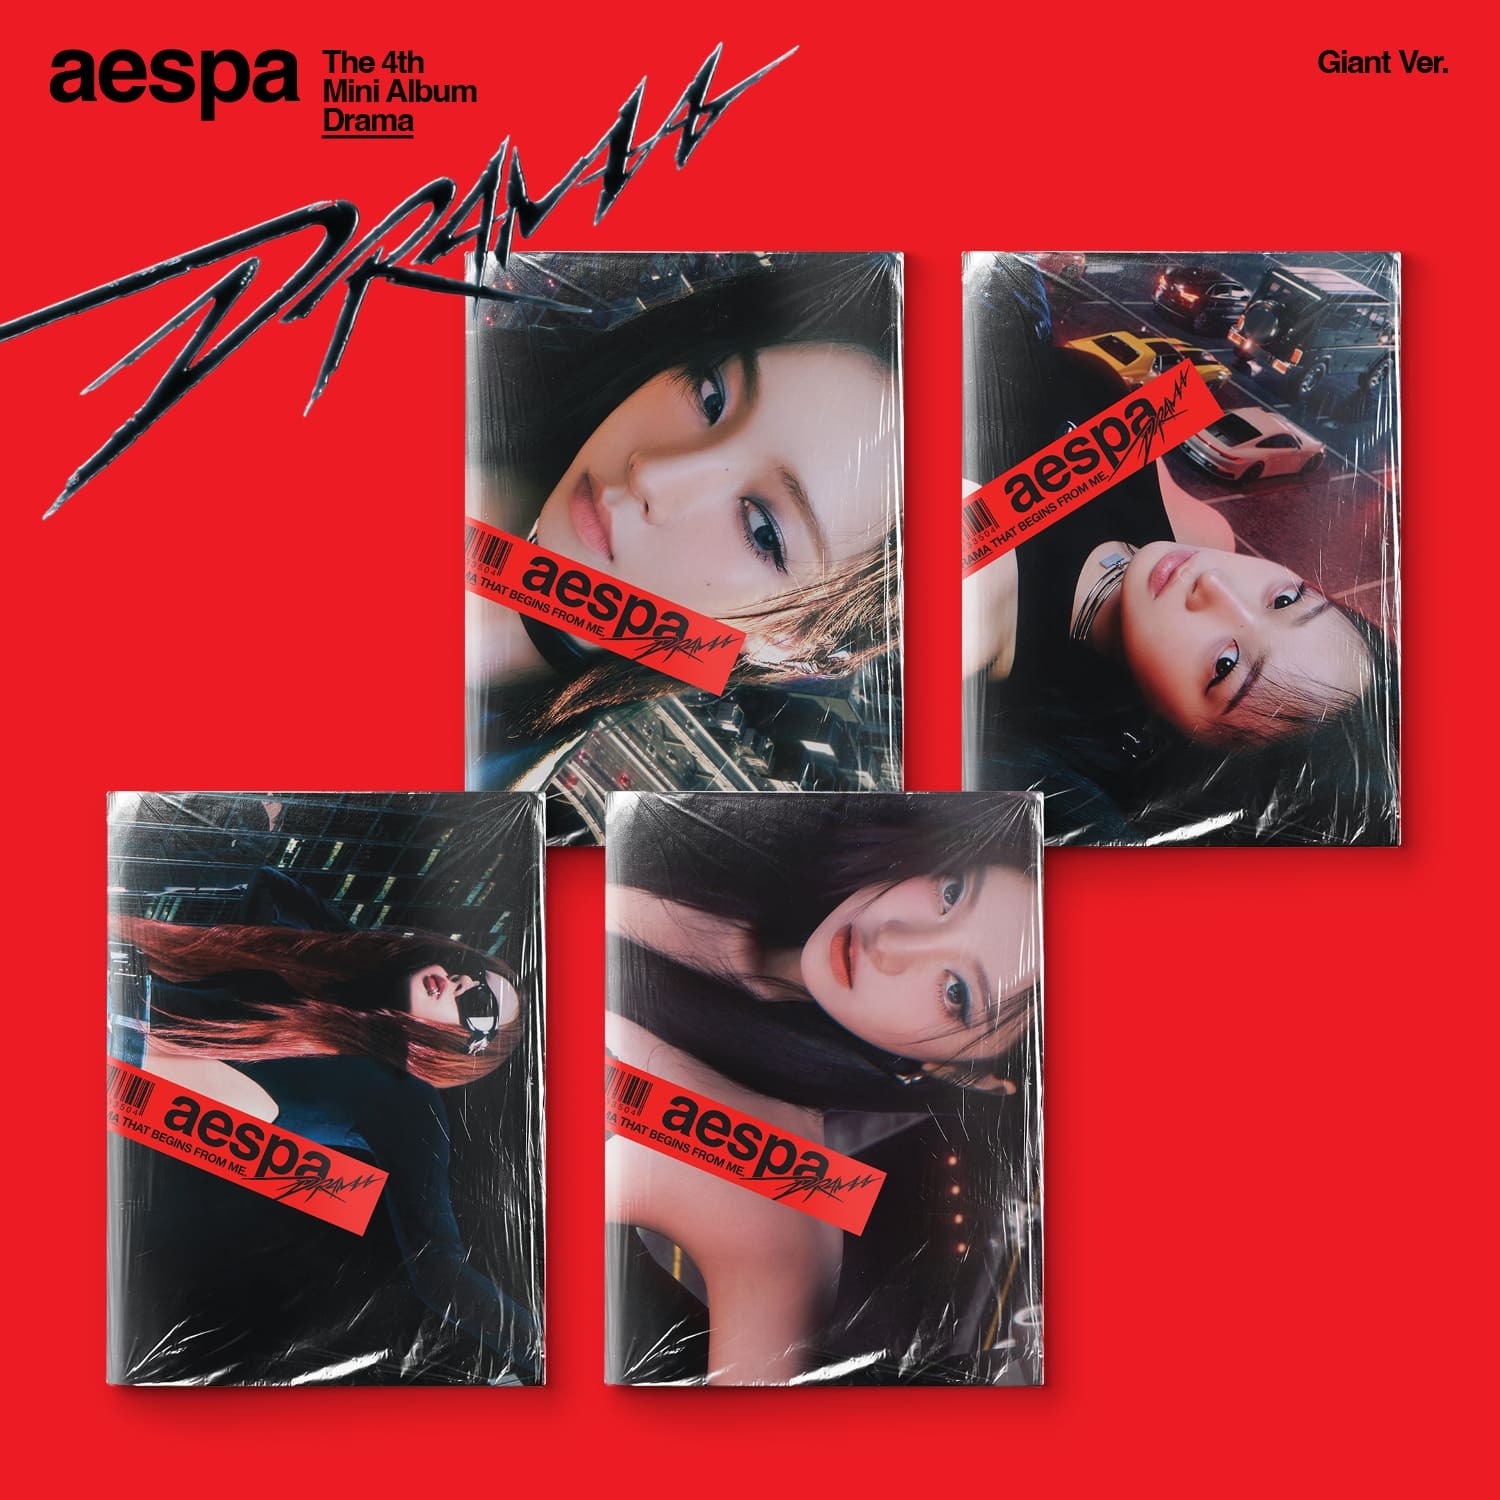 Aespa - Drama (4th Mini Album) [Giant Ver.]